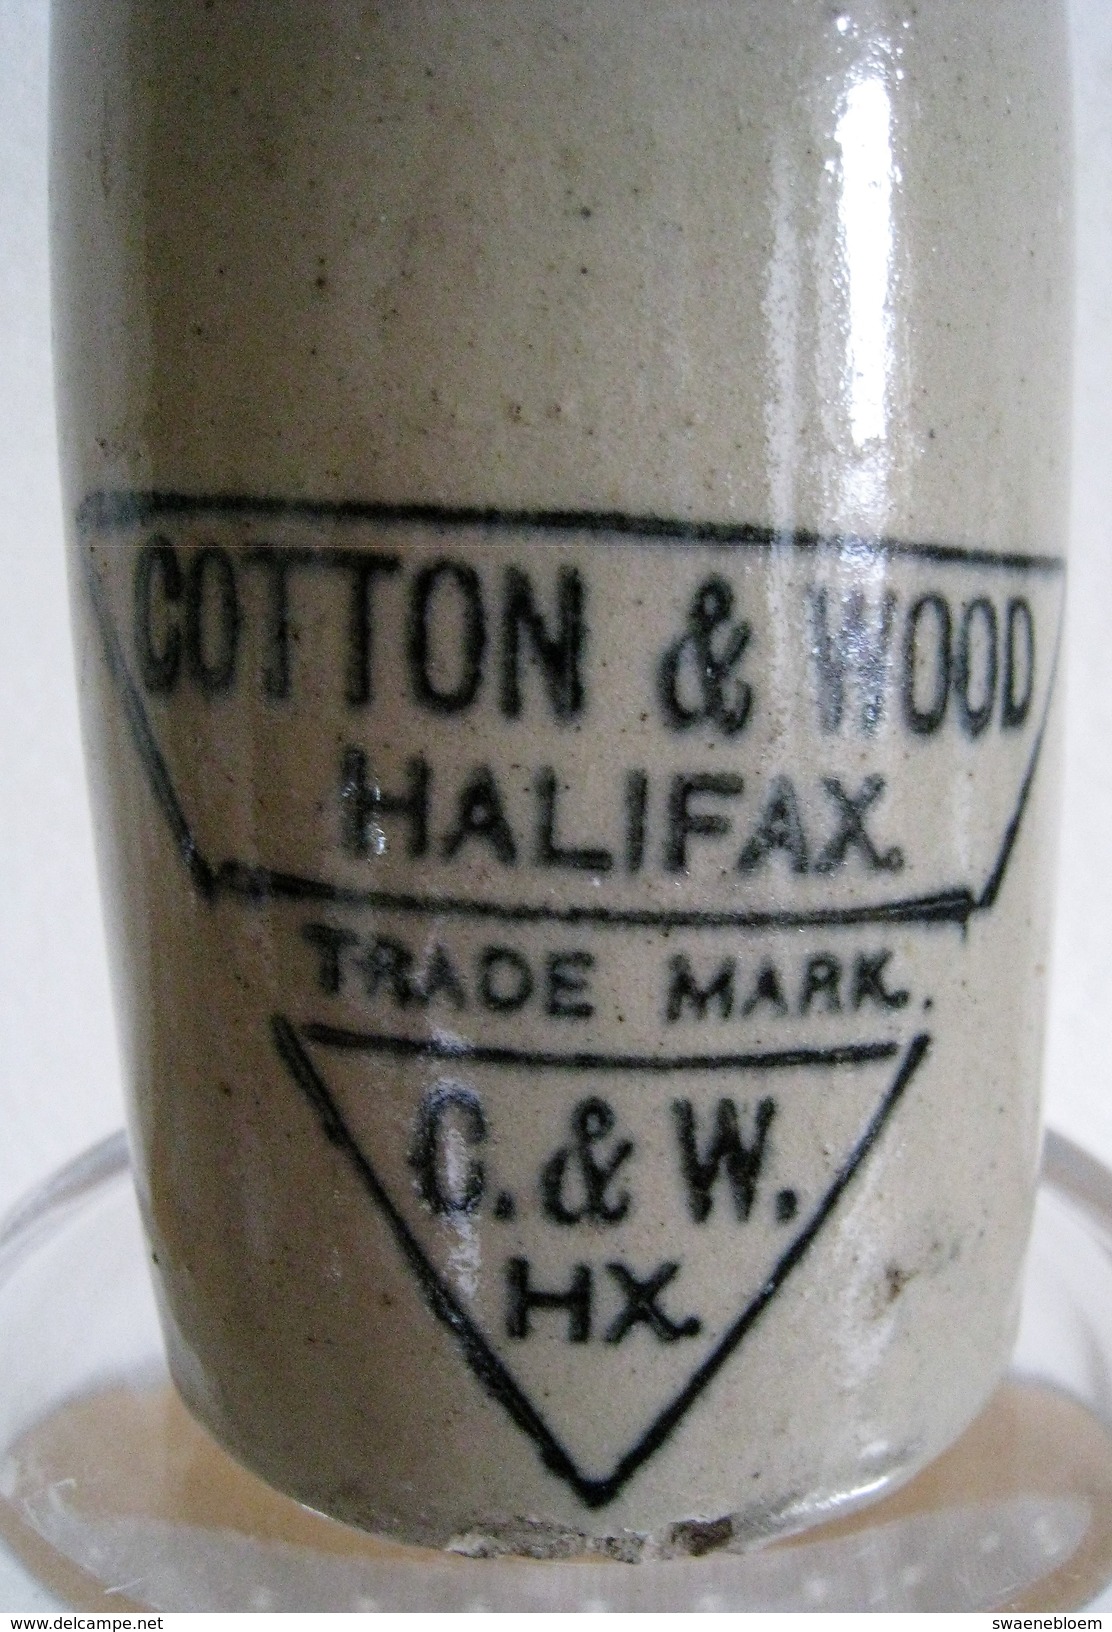 GB.- COTTON & WOOD. HALIFAX. TRADE MARK. C. & W. HX. 4 Scans. - Unclassified